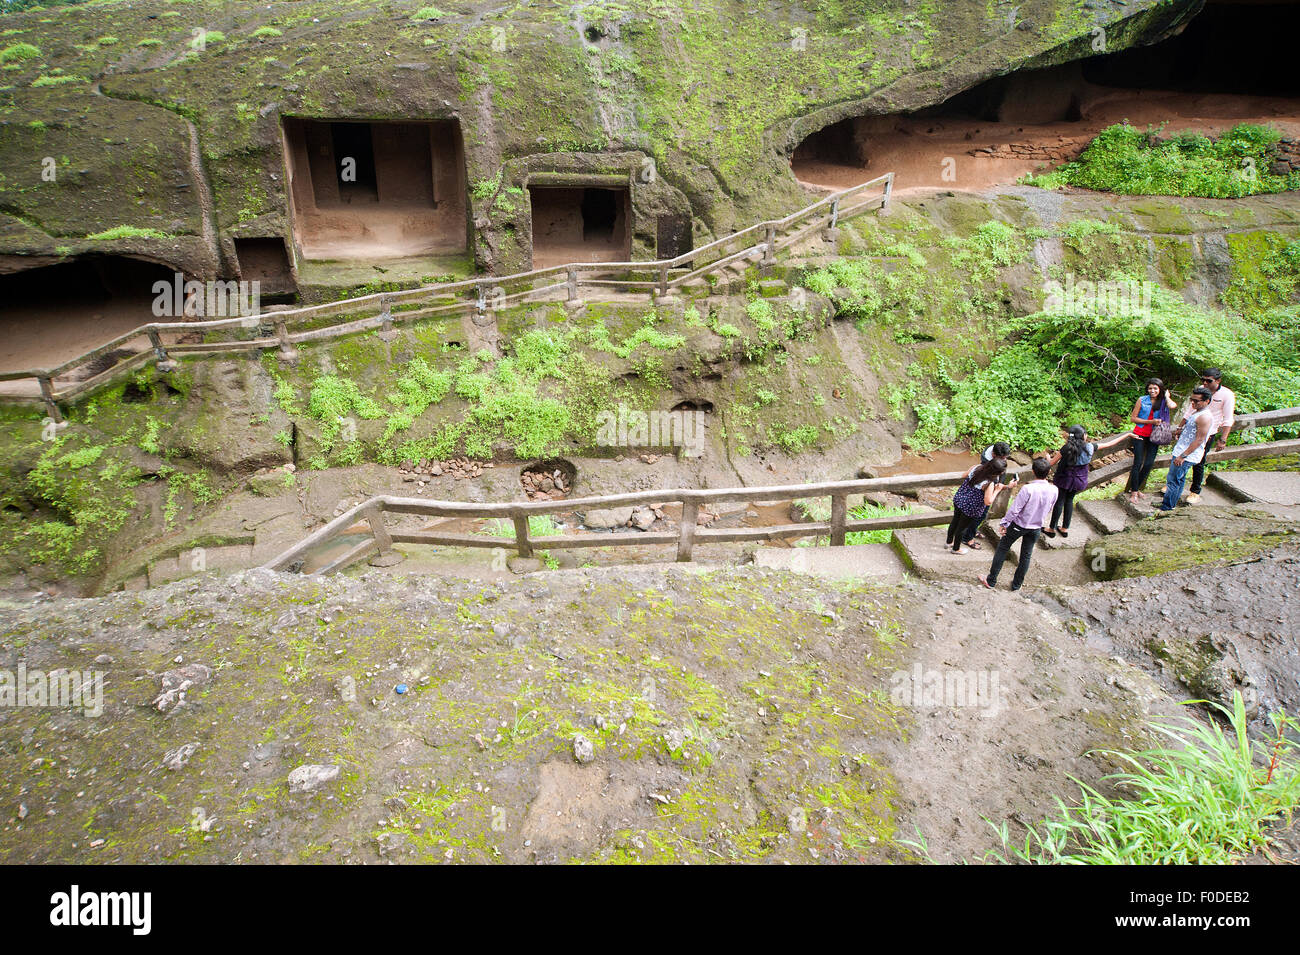 The Kanheri caves was shot in Sanjay Gandhi national park, Mumbai, India Stock Photo